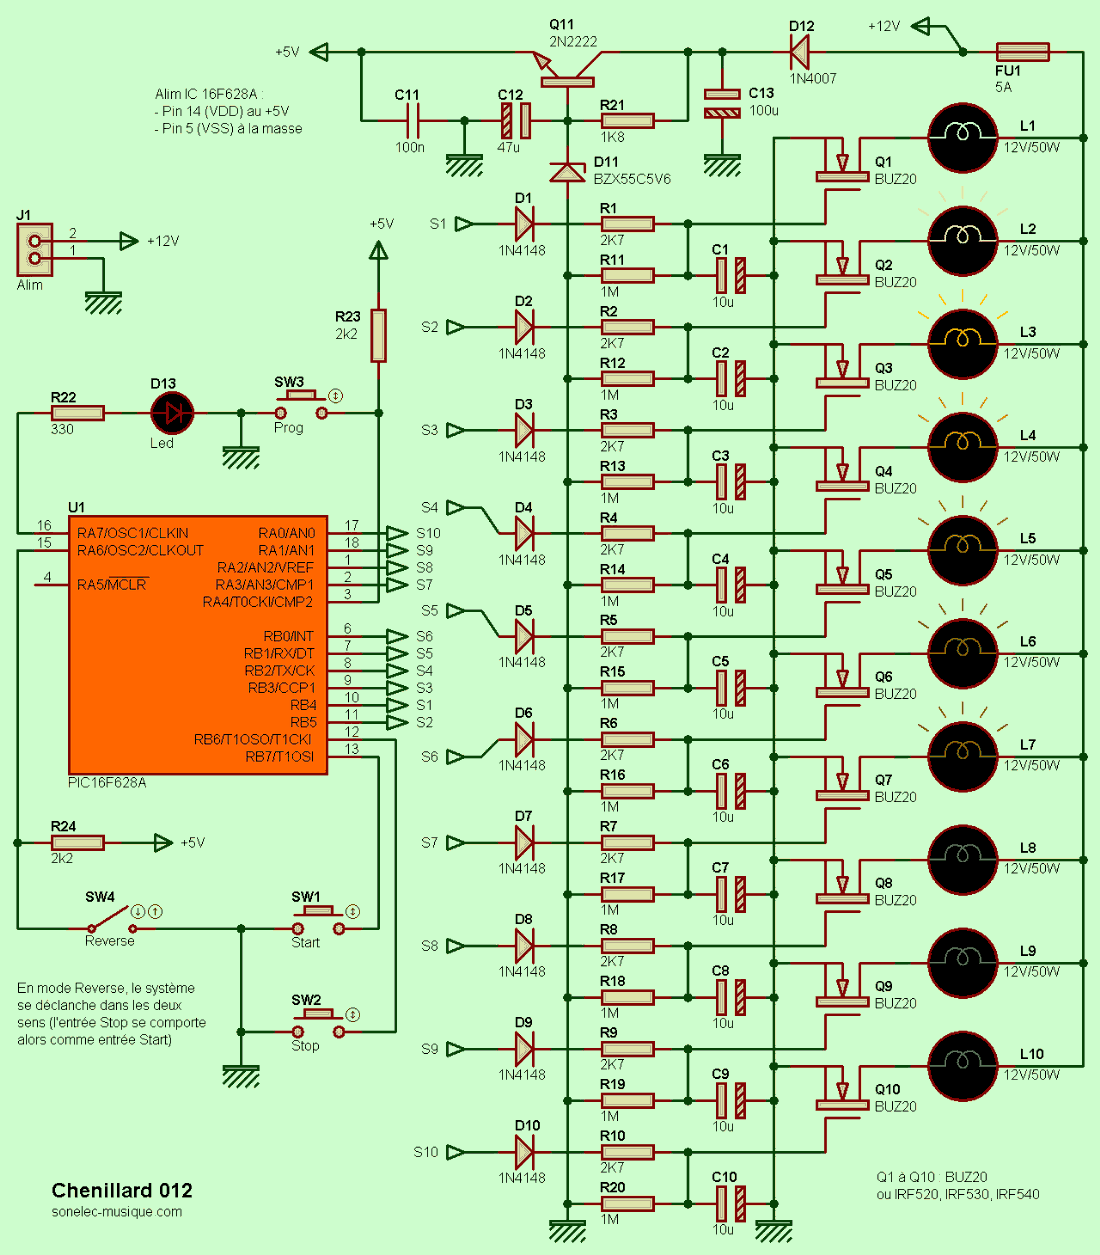 10-channel-12-volt-60-watt-lamp-effect-circuit-pic16f628a